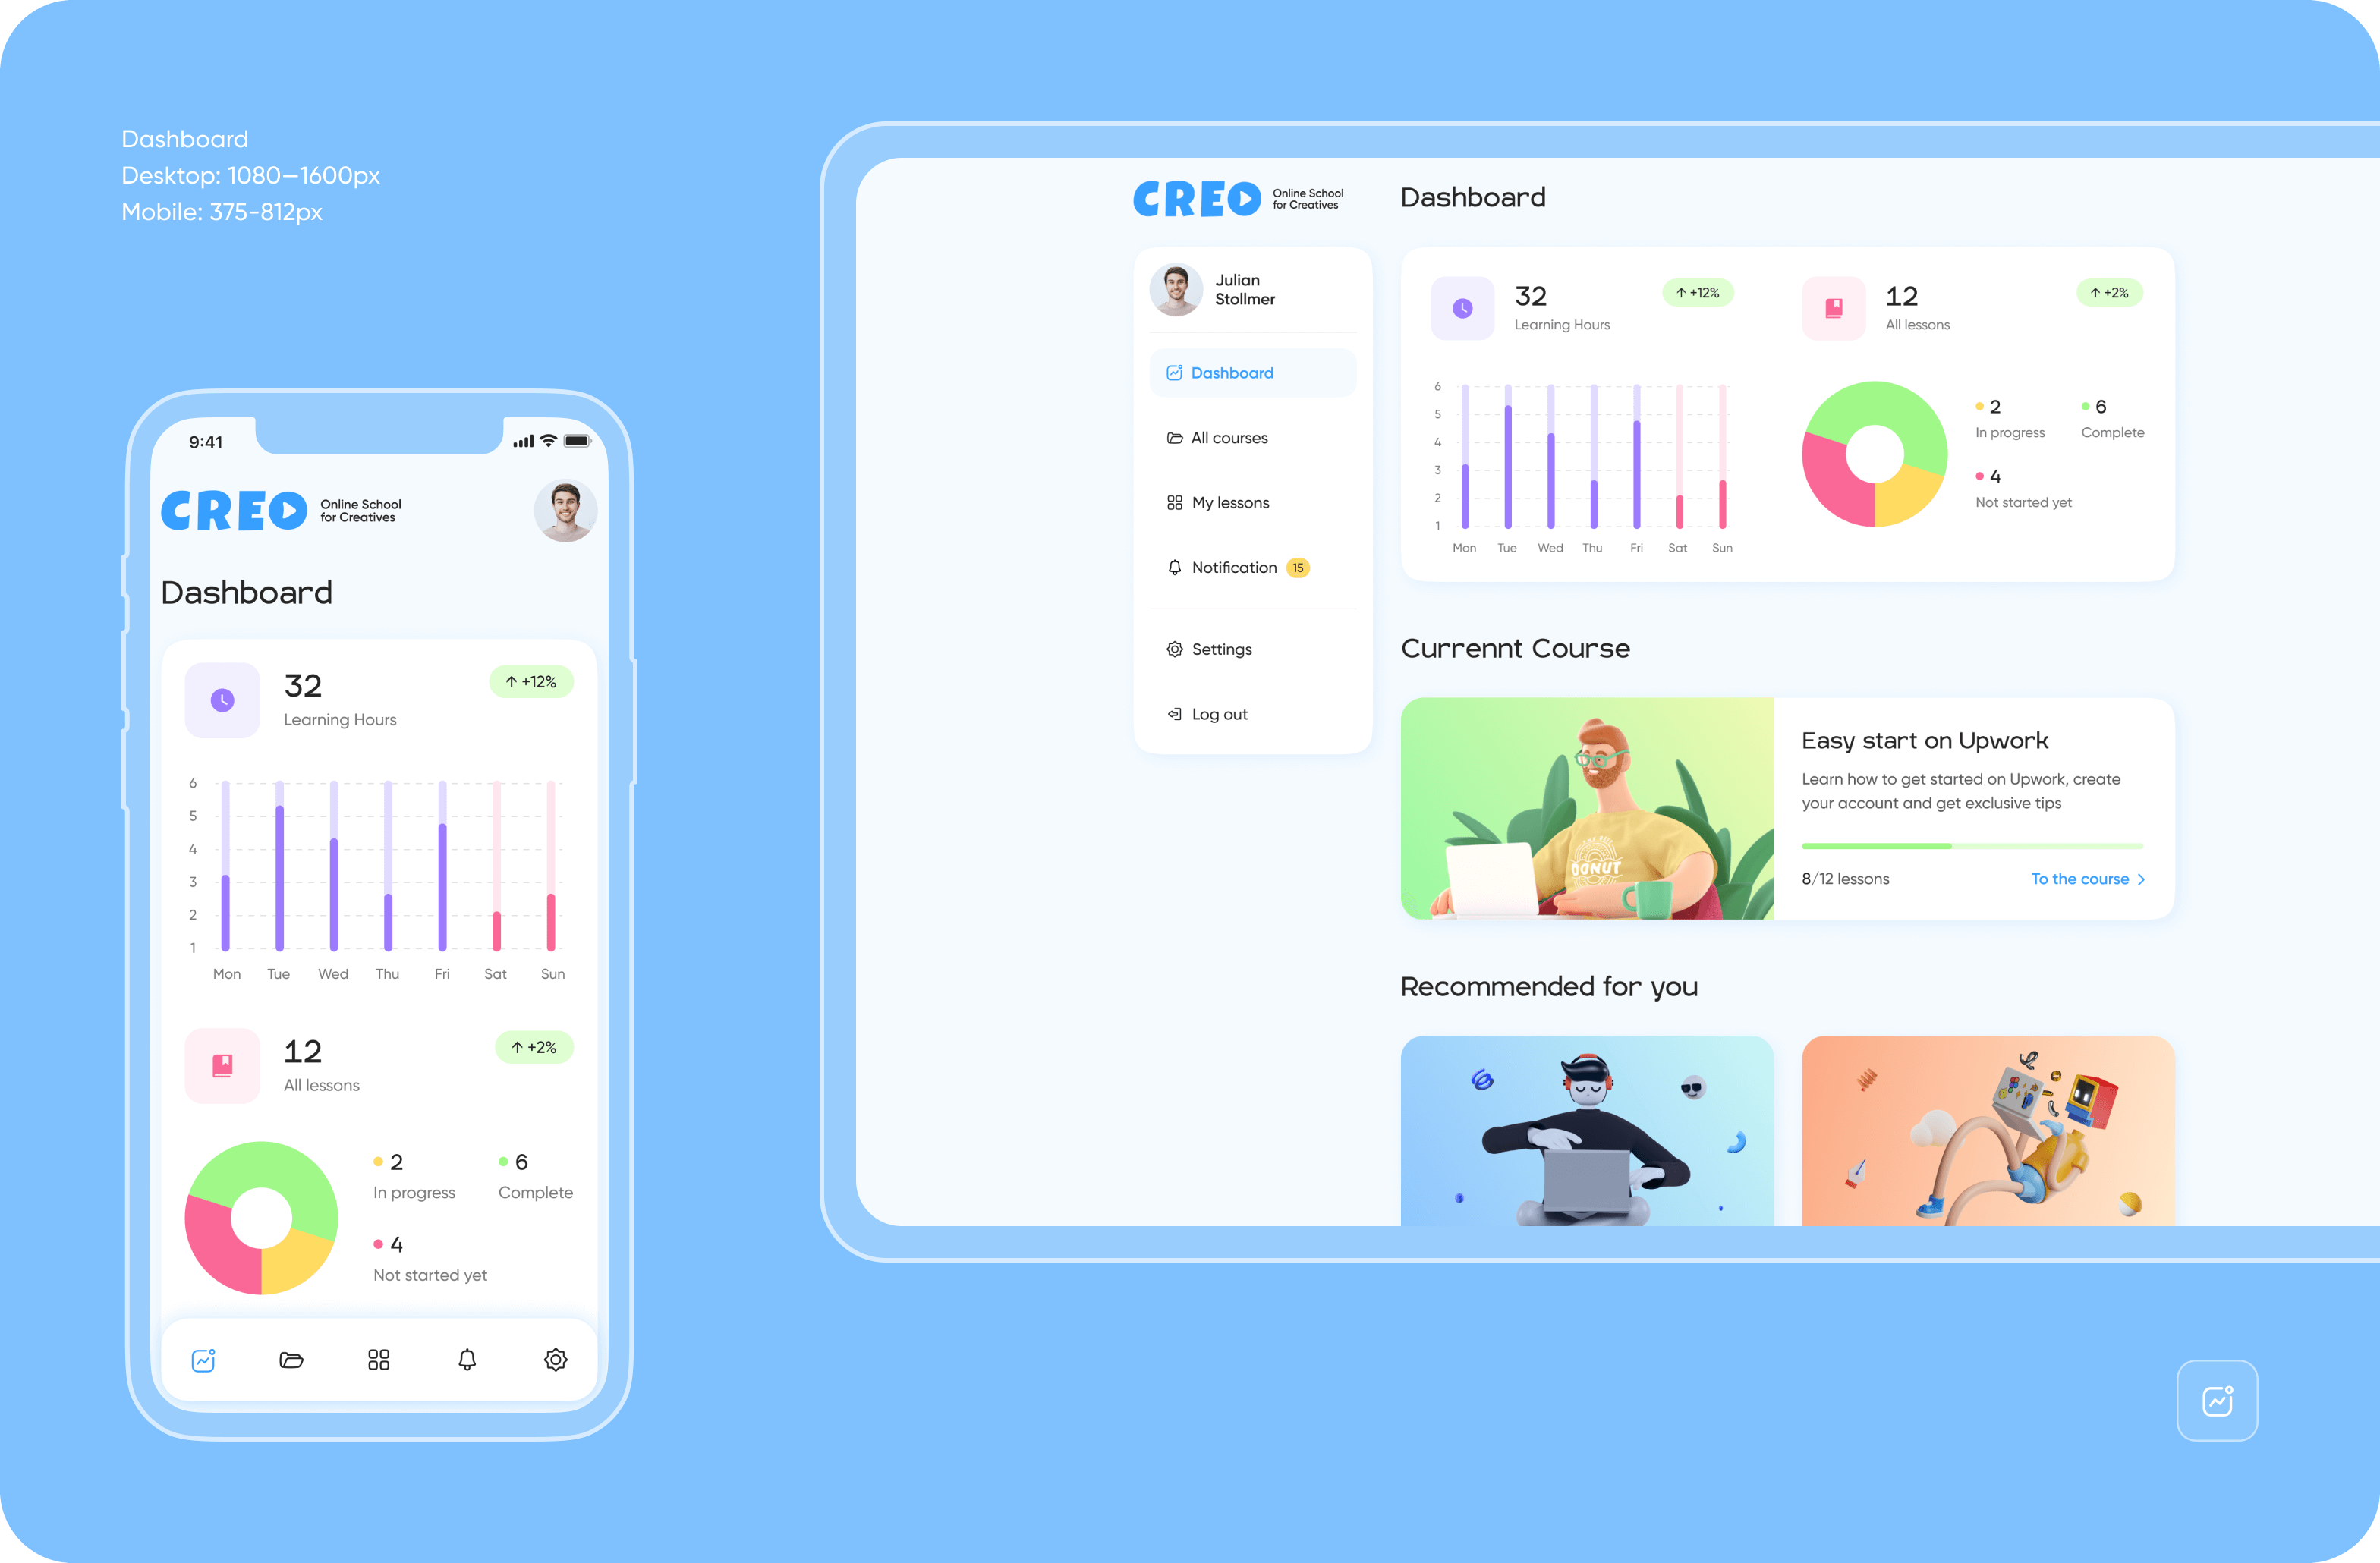 creo-case-preview-desktop.png - Розробка платформи онлайн-навчання для дизайнерів Creo - goodface.agency